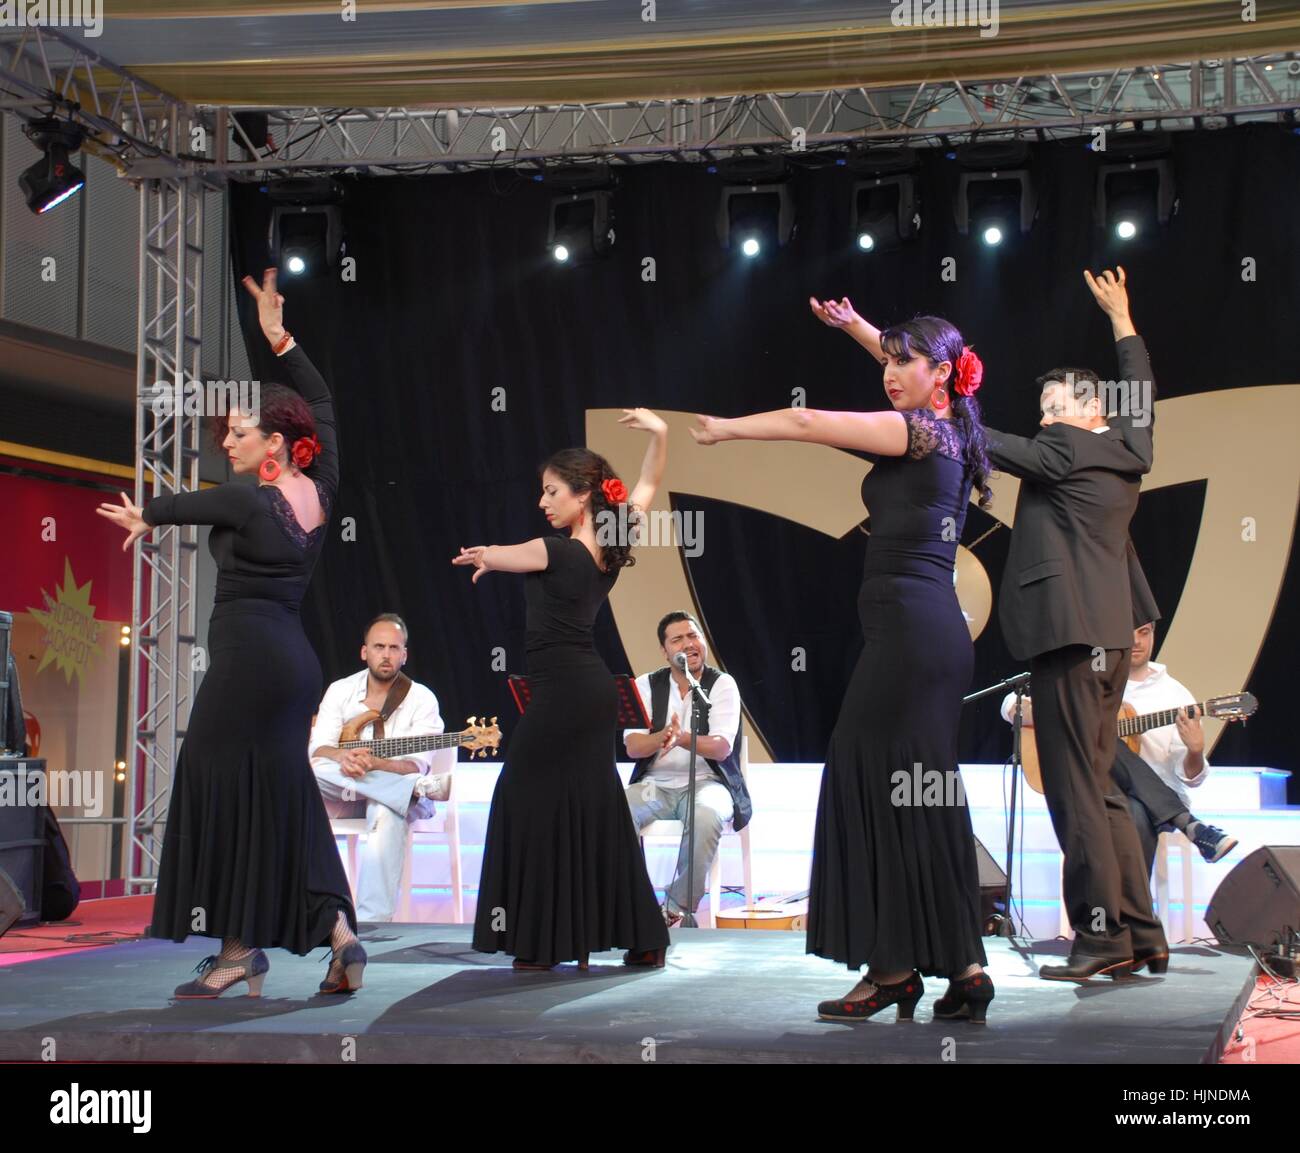 Spanish Flamenco Dancer at the Kentpark Shopping Mall's Ankara Shopping Fest stage. Stock Photo